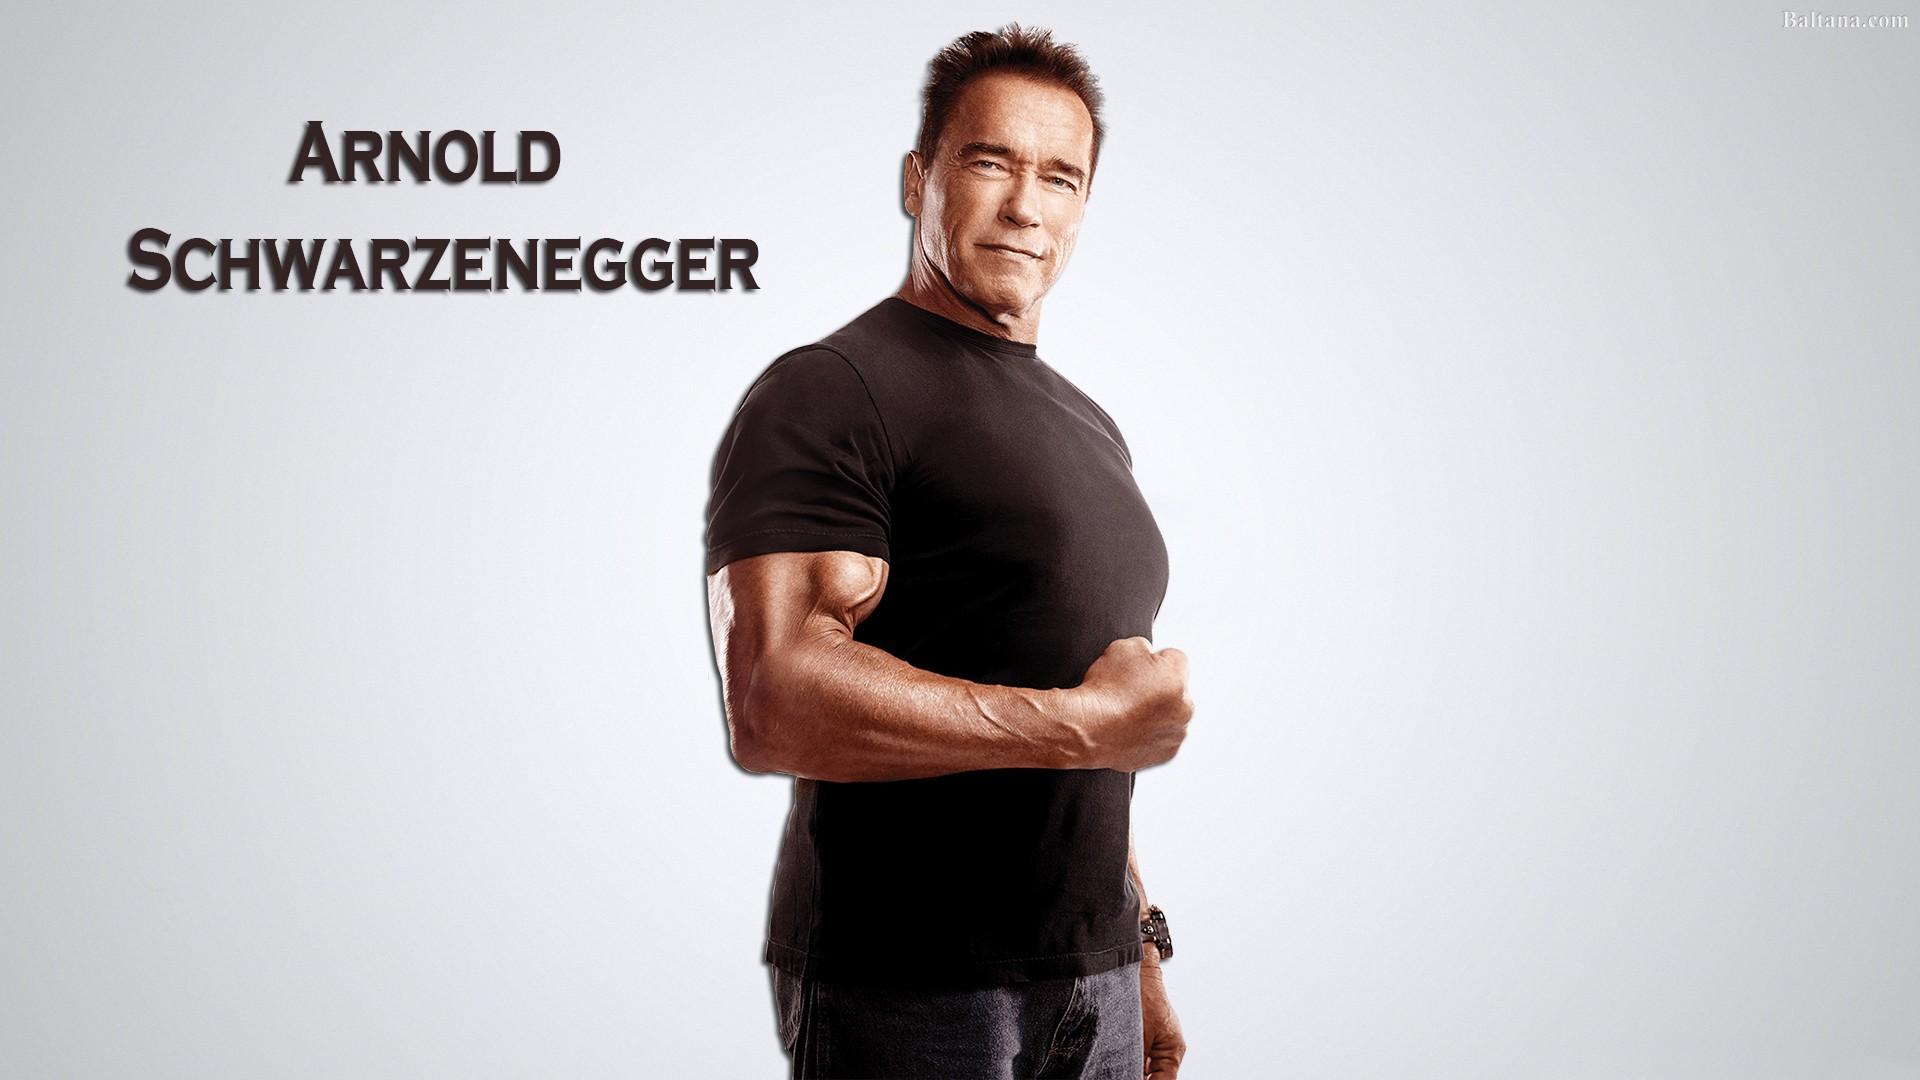 Arnold Schwarzenegger Wallpaper HD Background, Image, Pics